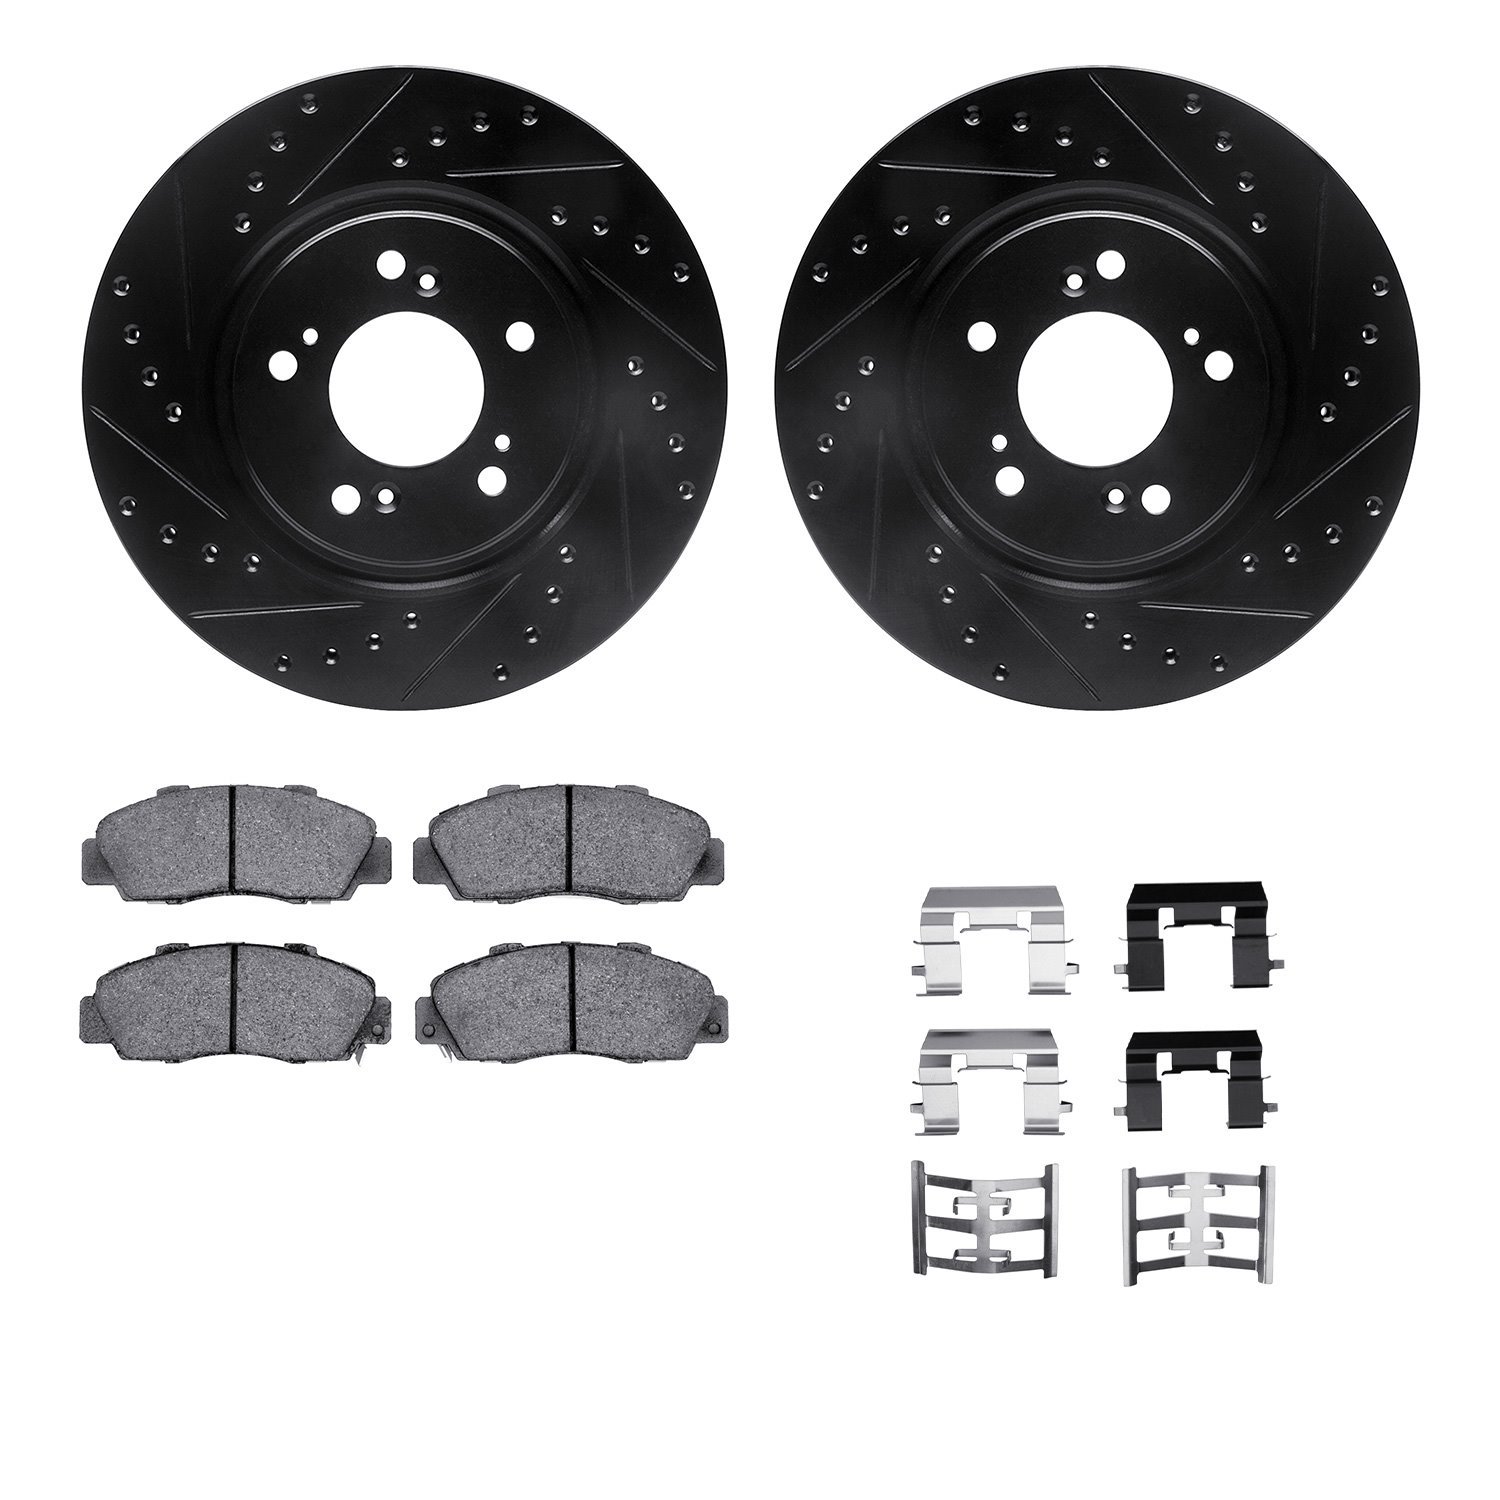 8312-58006 Drilled/Slotted Brake Rotors with 3000-Series Ceramic Brake Pads Kit & Hardware [Black], 1997-2005 Acura/Honda, Posit